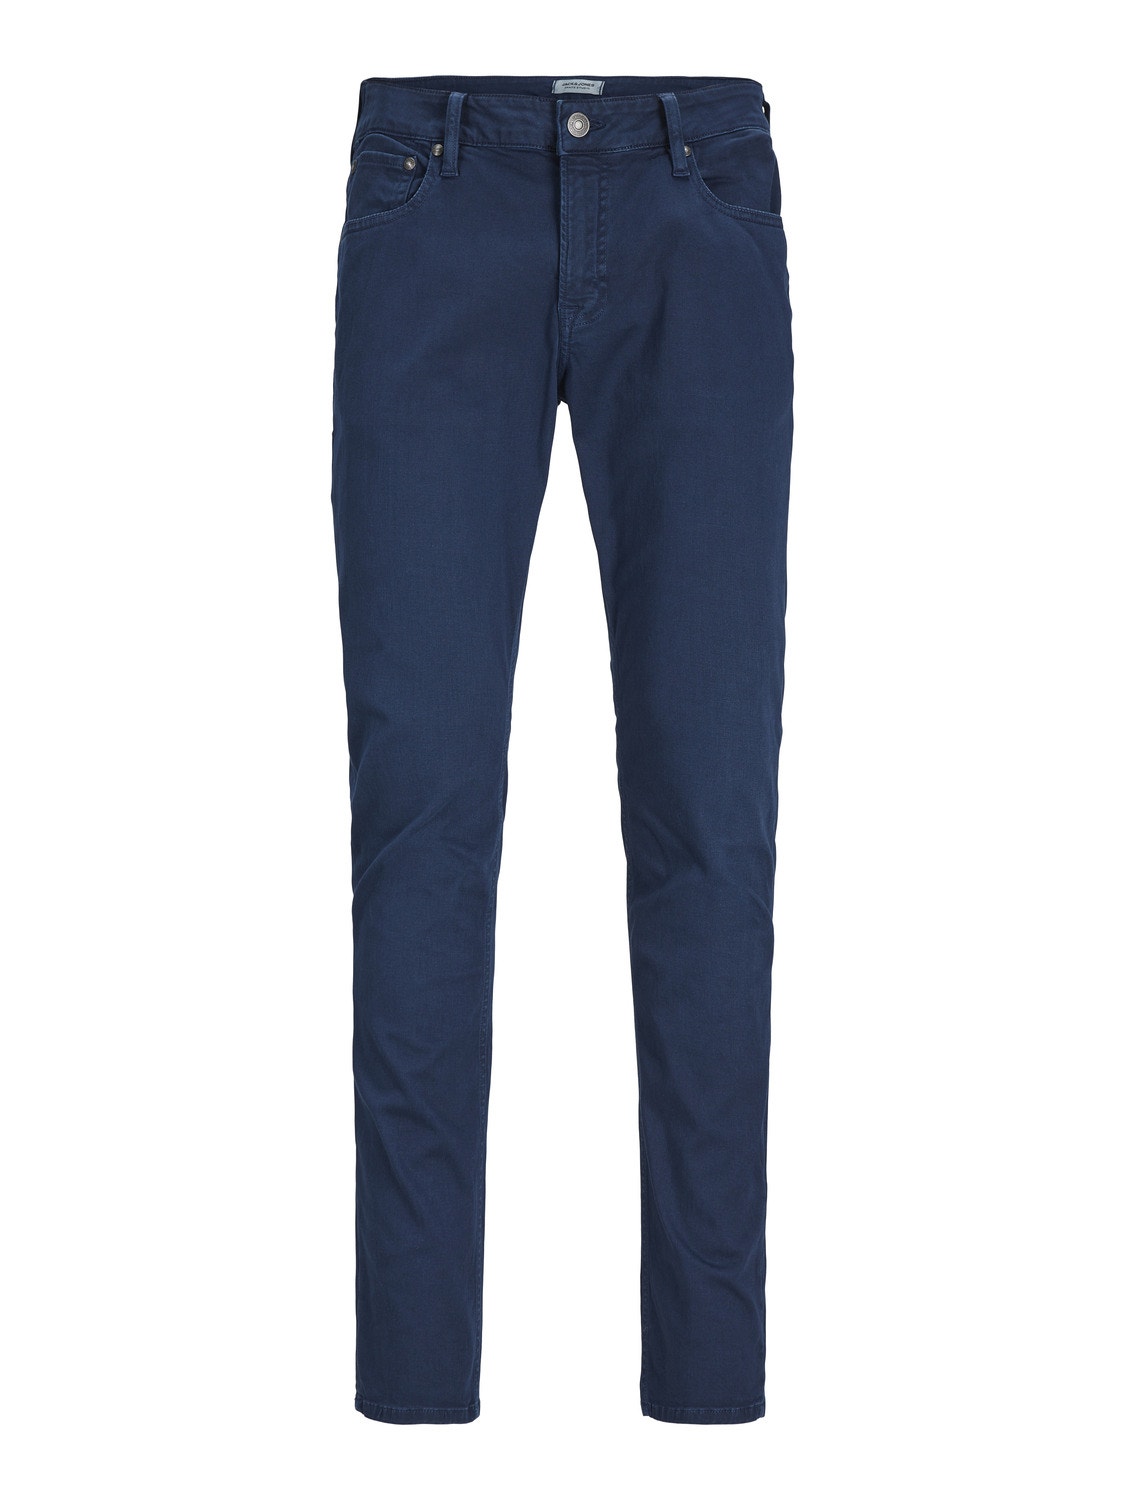 Jack & Jones Slim Fit Plátěné kalhoty Chino -Navy Blazer - 12248680